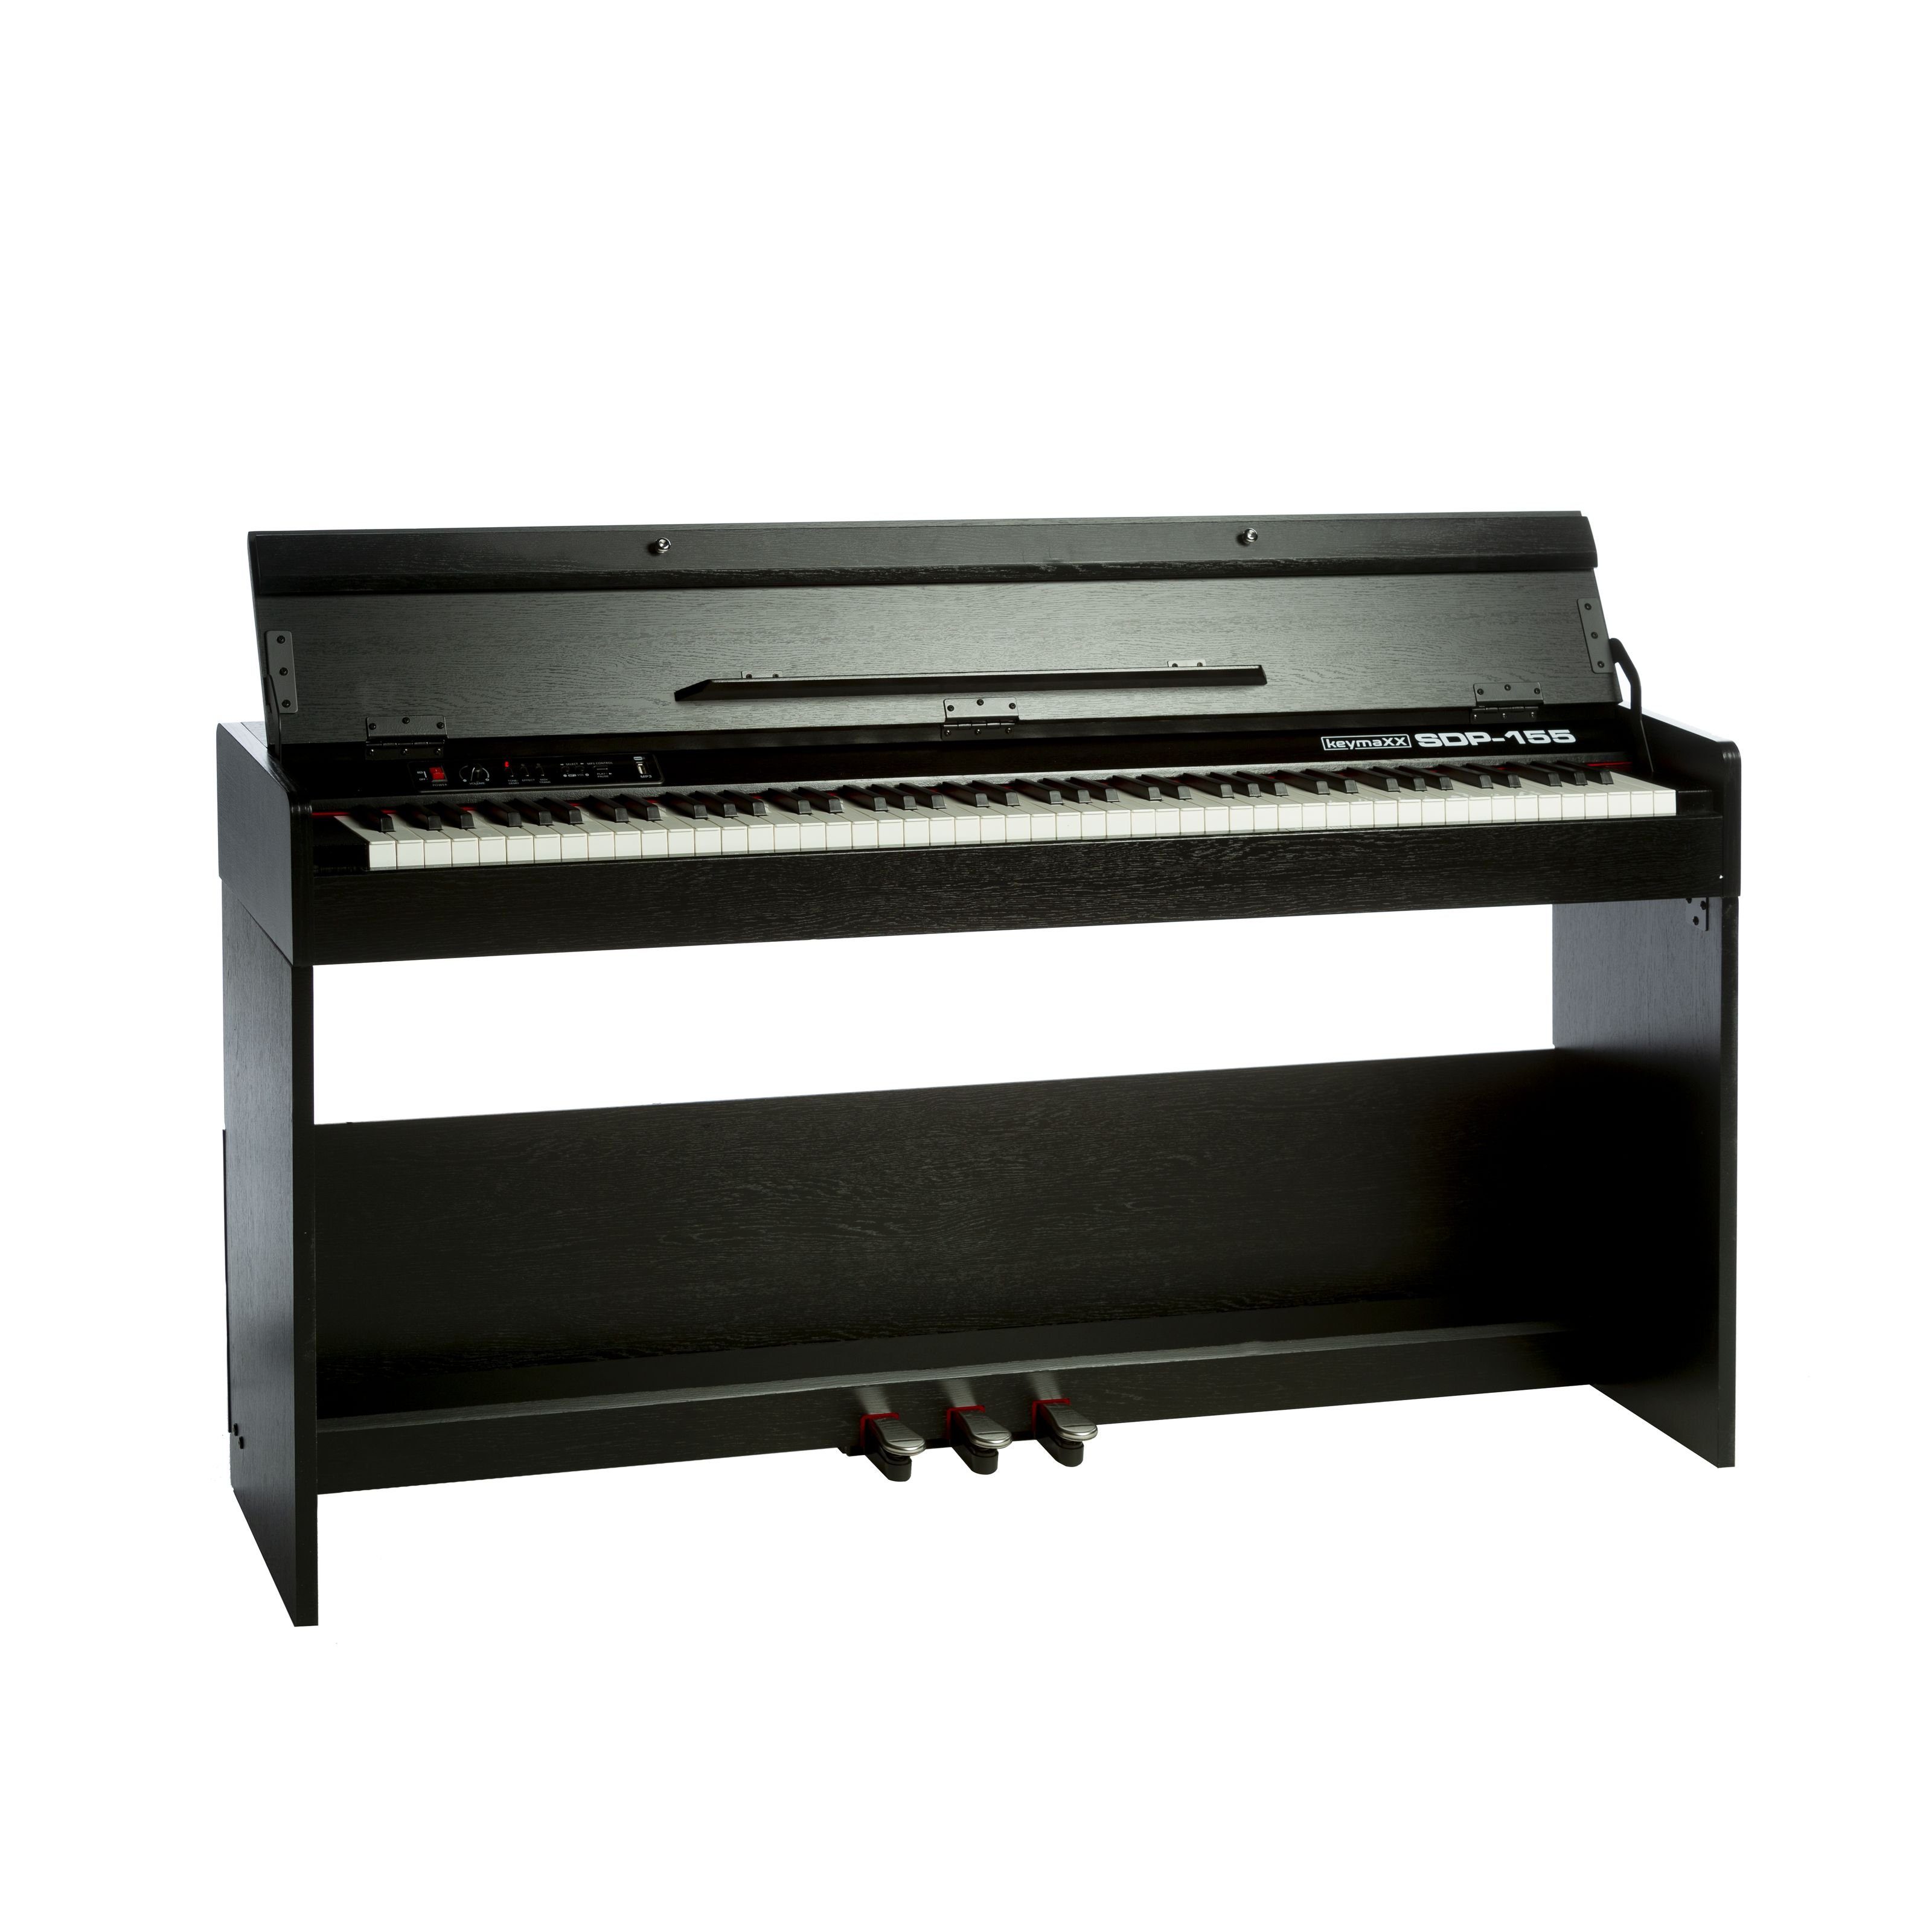 keymaXX Digitalpiano, Digital Piano 88 Tasten, Hammermechanik,  anschlagdynamisch, gewichtet